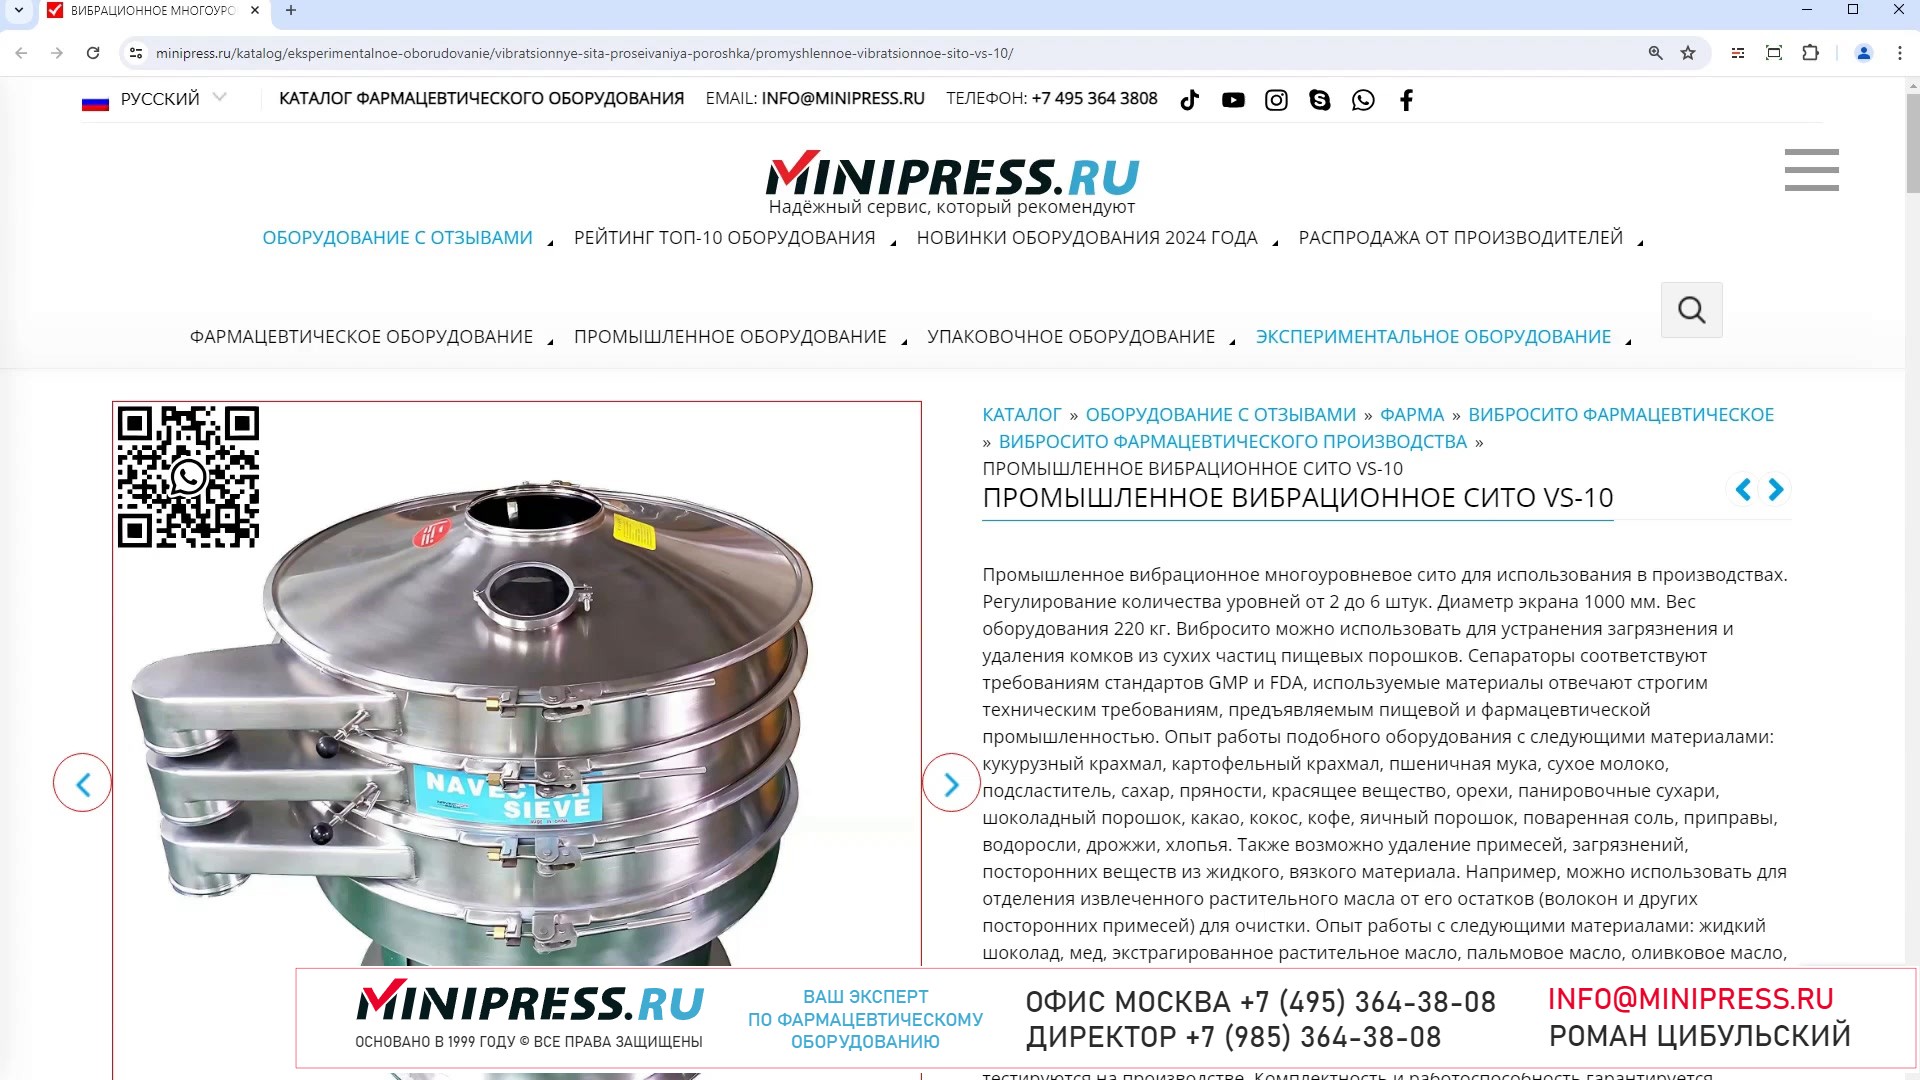 Minipress.ru Промышленное вибрационное сито VS-10